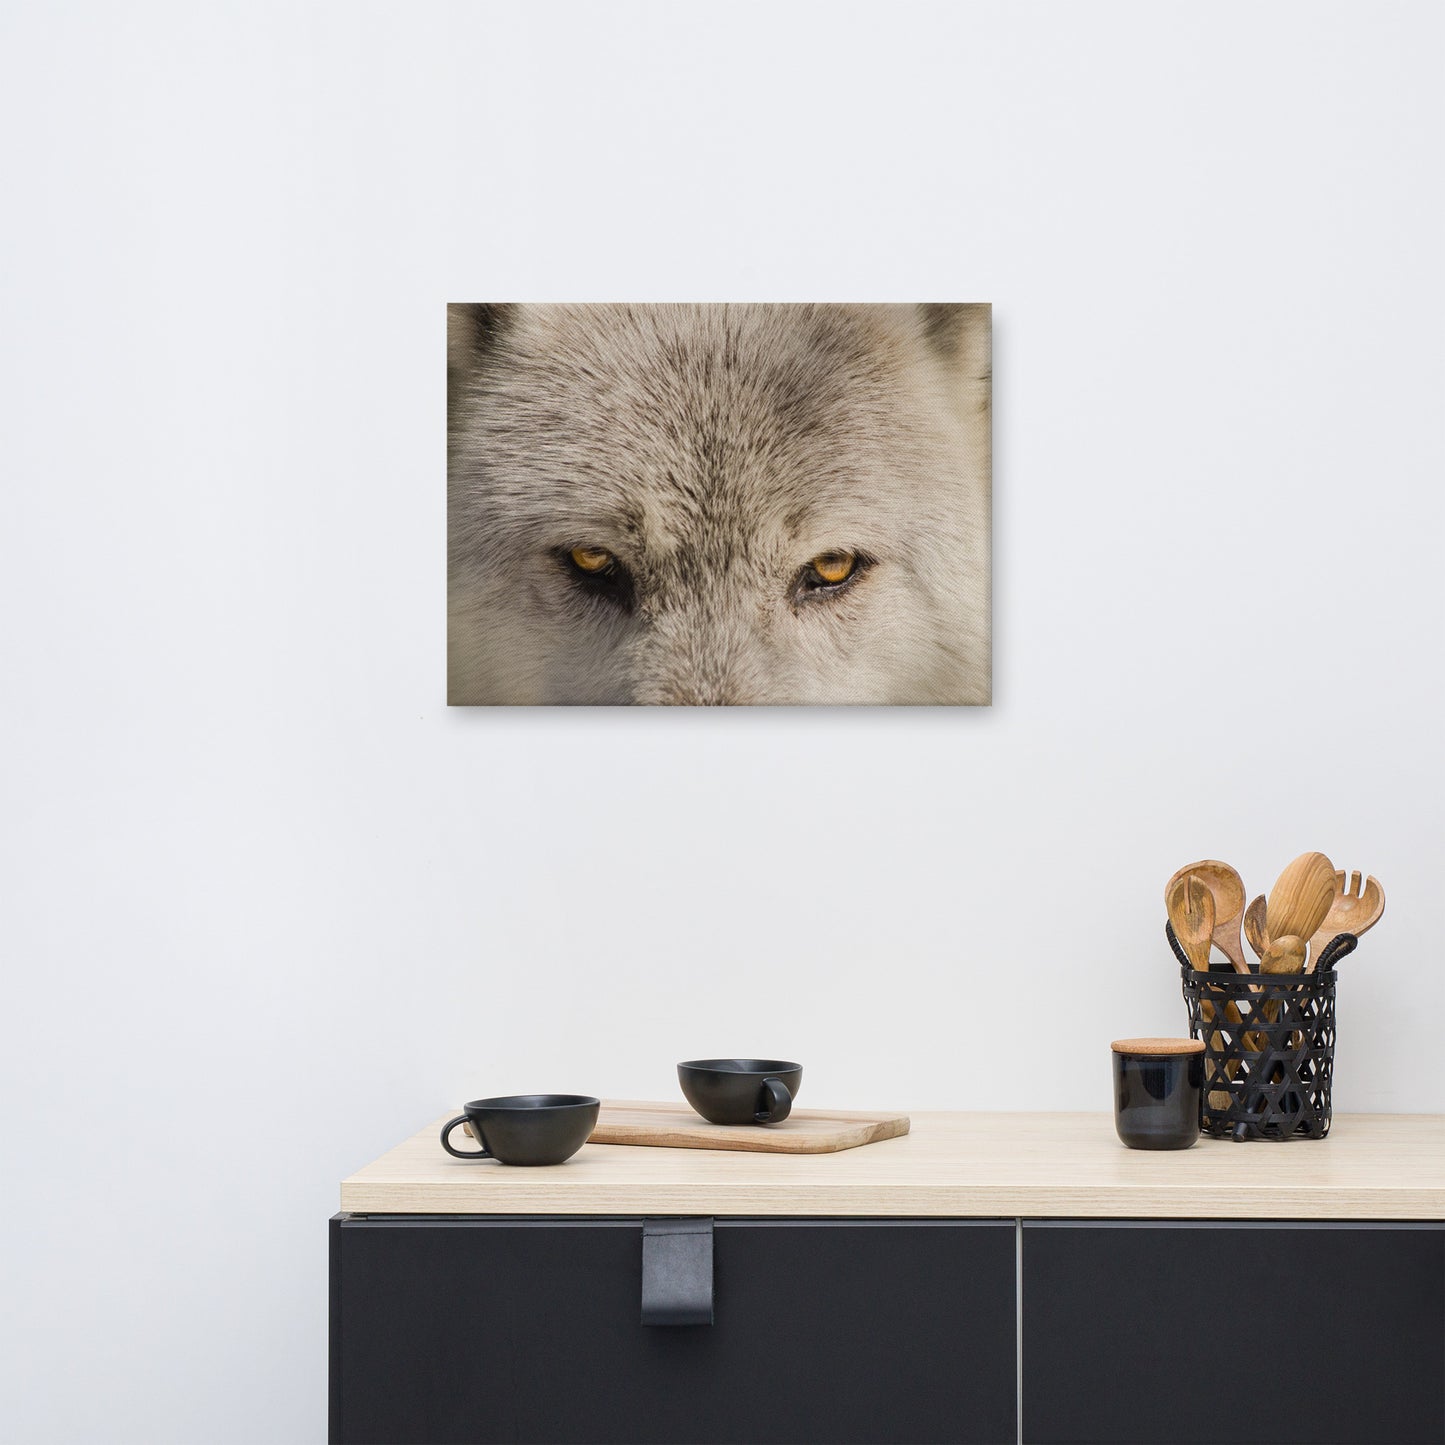 Wolf Eyes Animal / Wildlife Photograph Canvas Wall Art Prints